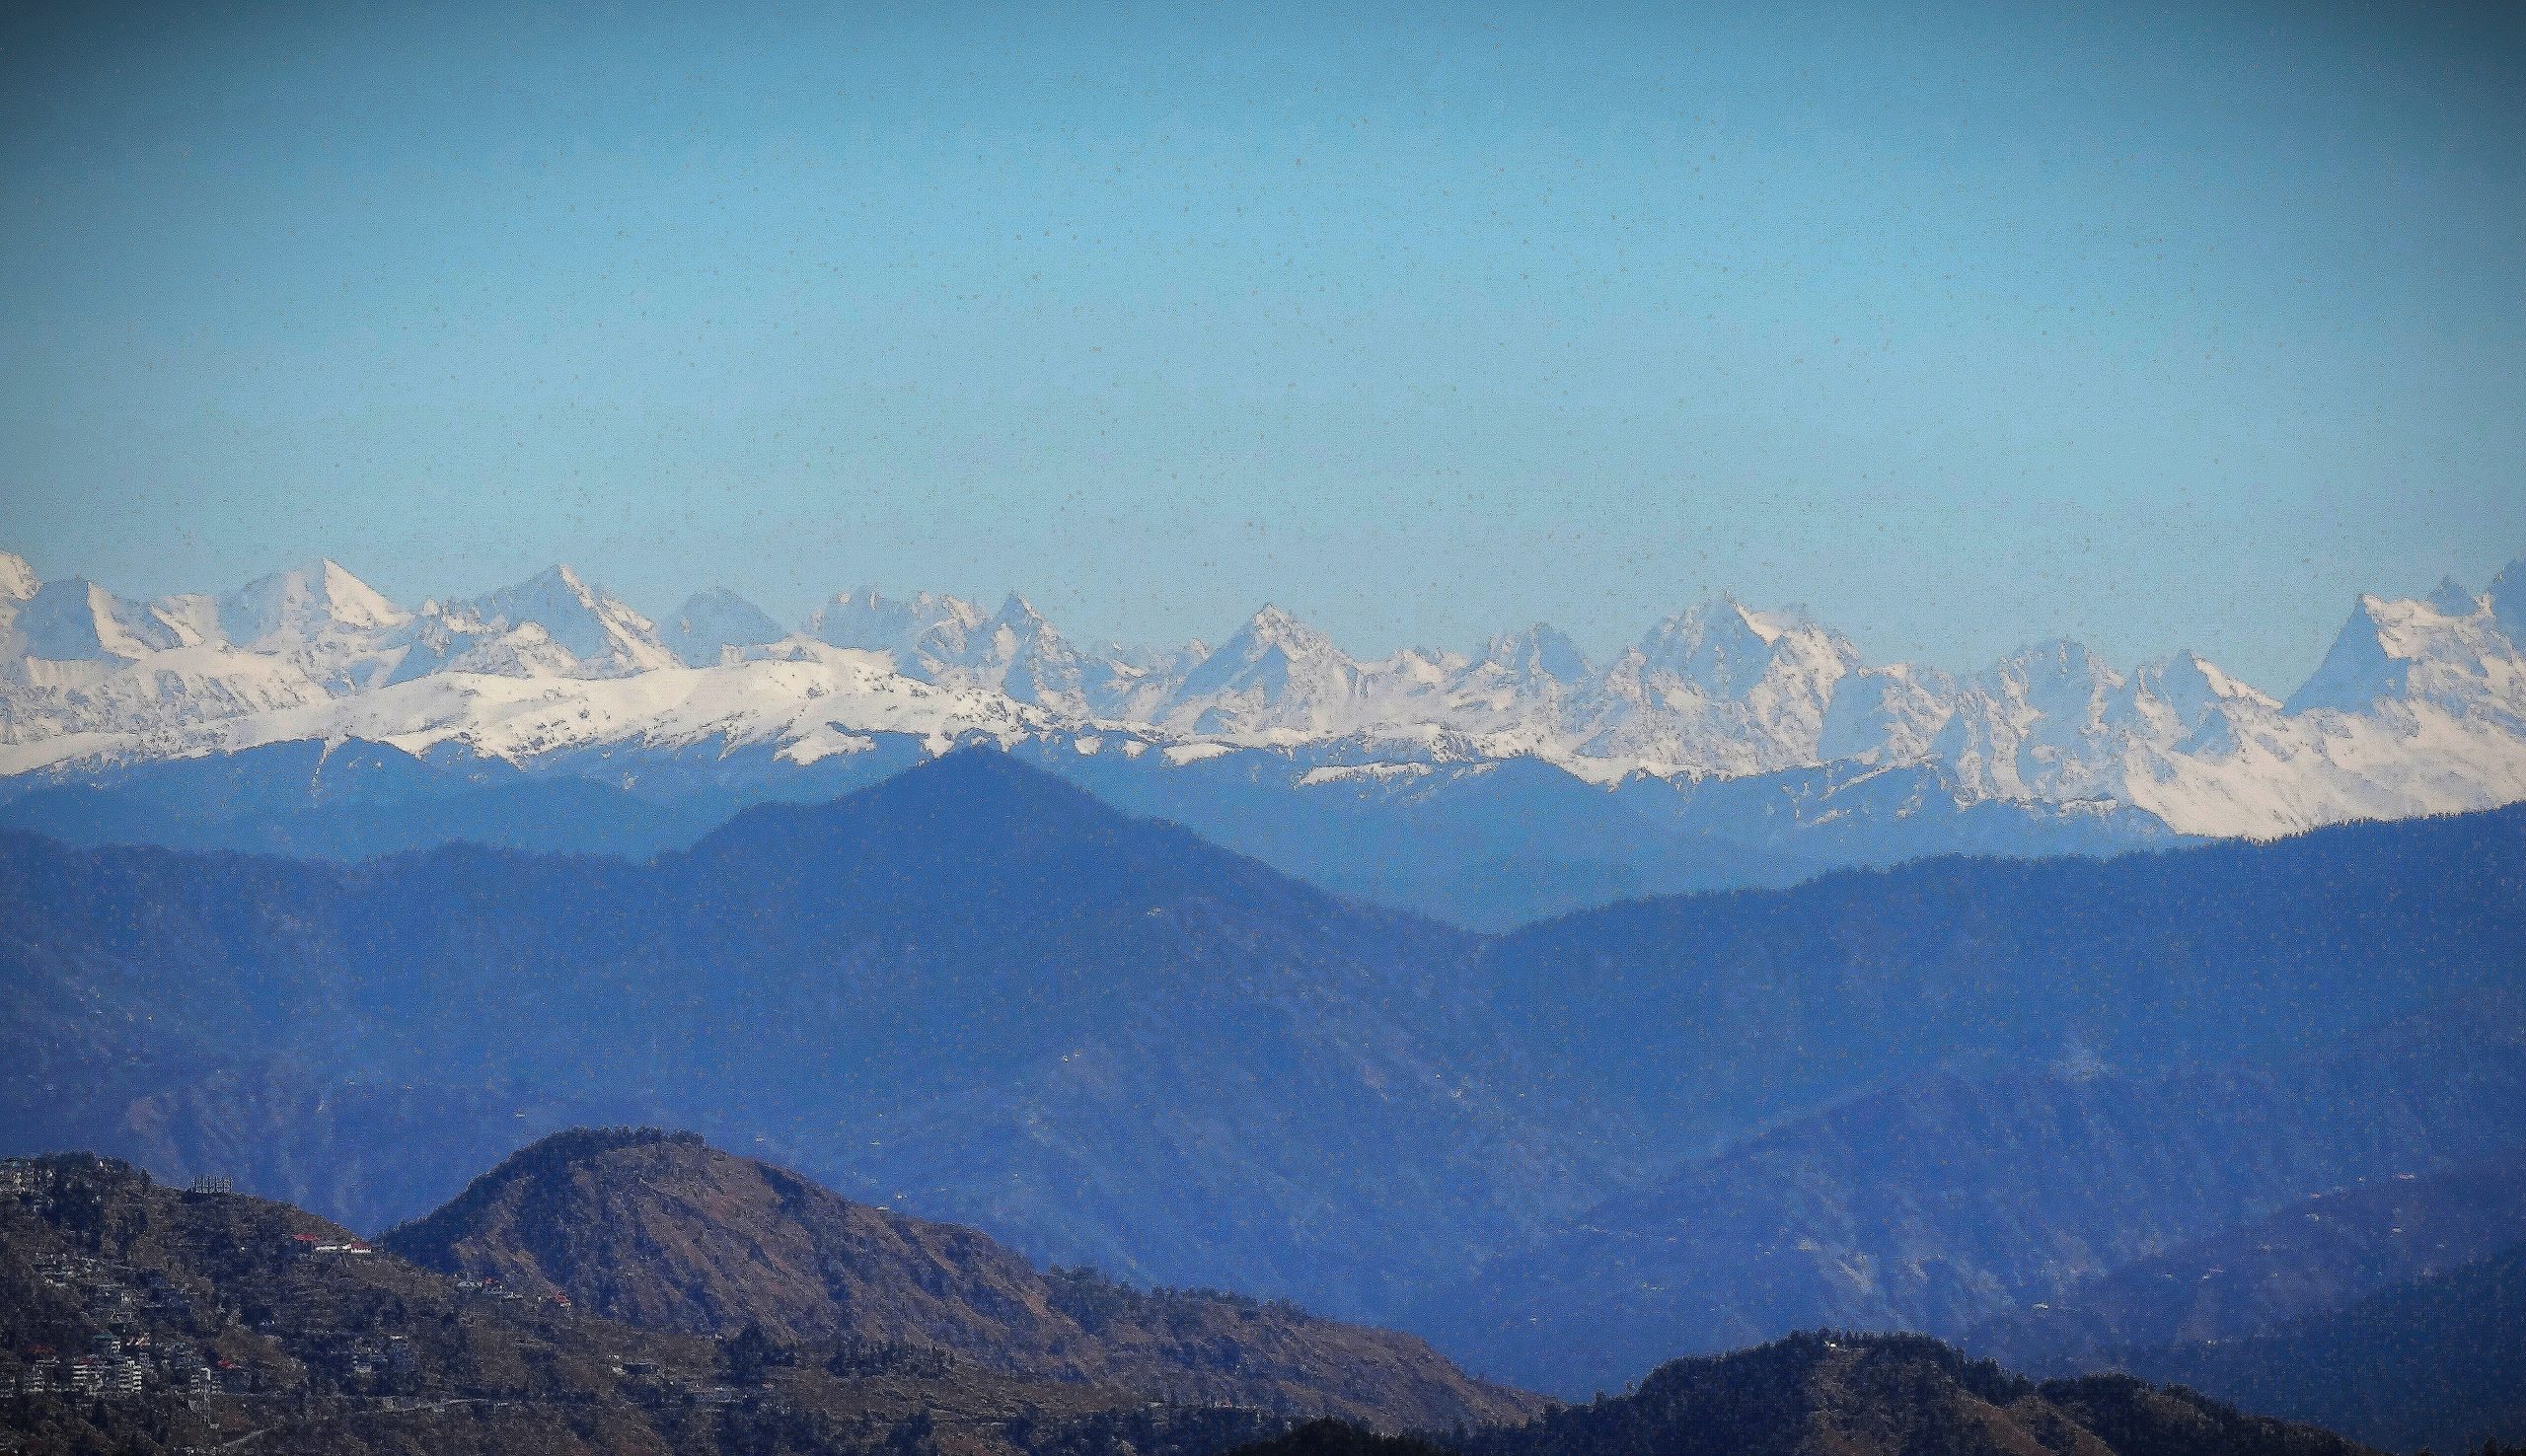 Dhauladhar mountain ranges of Dharamshala.